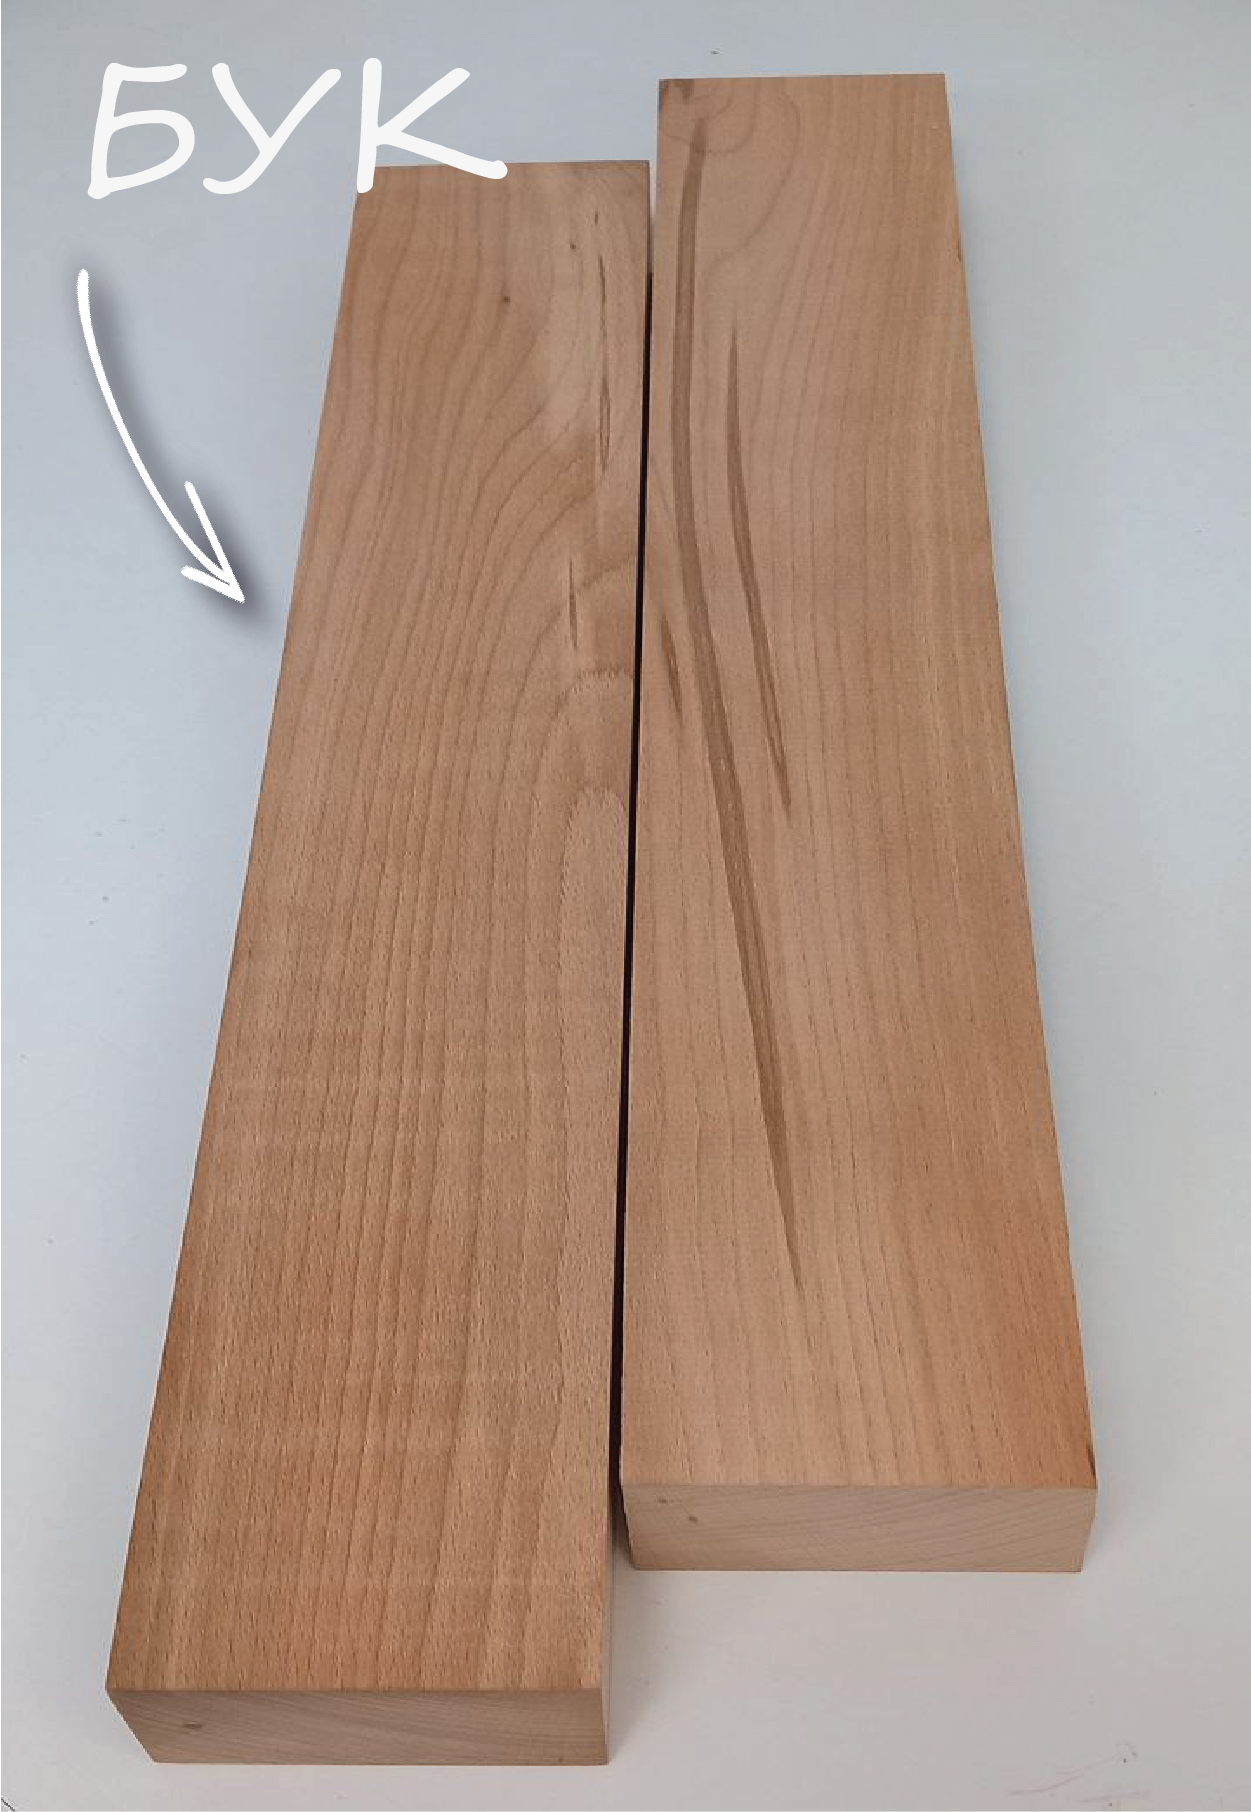 Брусок для резьбы БУК 550х85х40-45 мм брусок деревянный для творчества и хобби